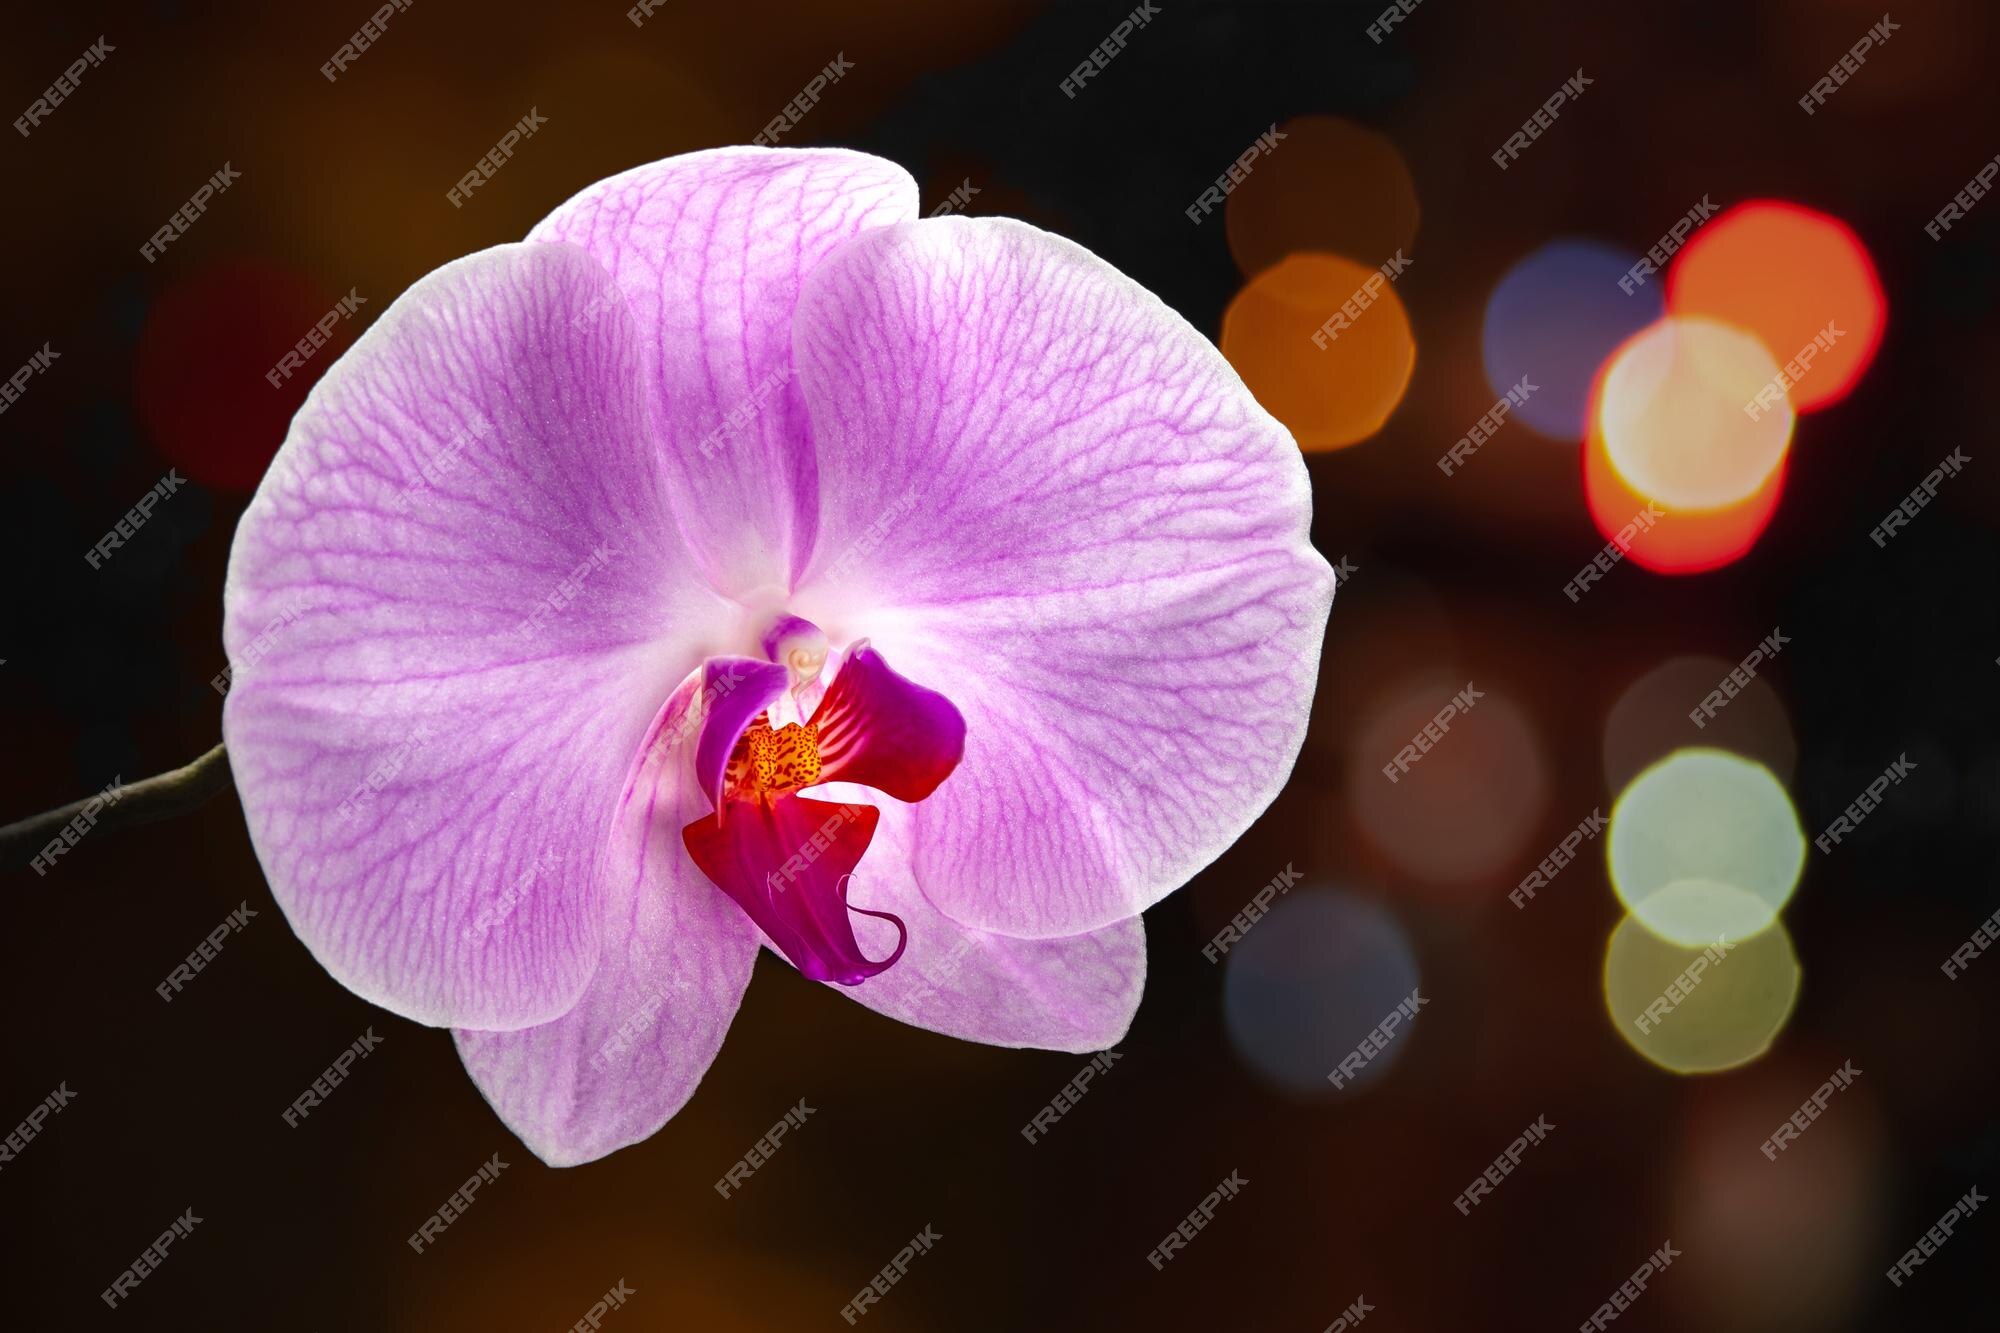 Flor de orquídea roxa sobre fundo escuro com bokeh destaca a flor de  orquídea phalaenopsis | Foto Premium